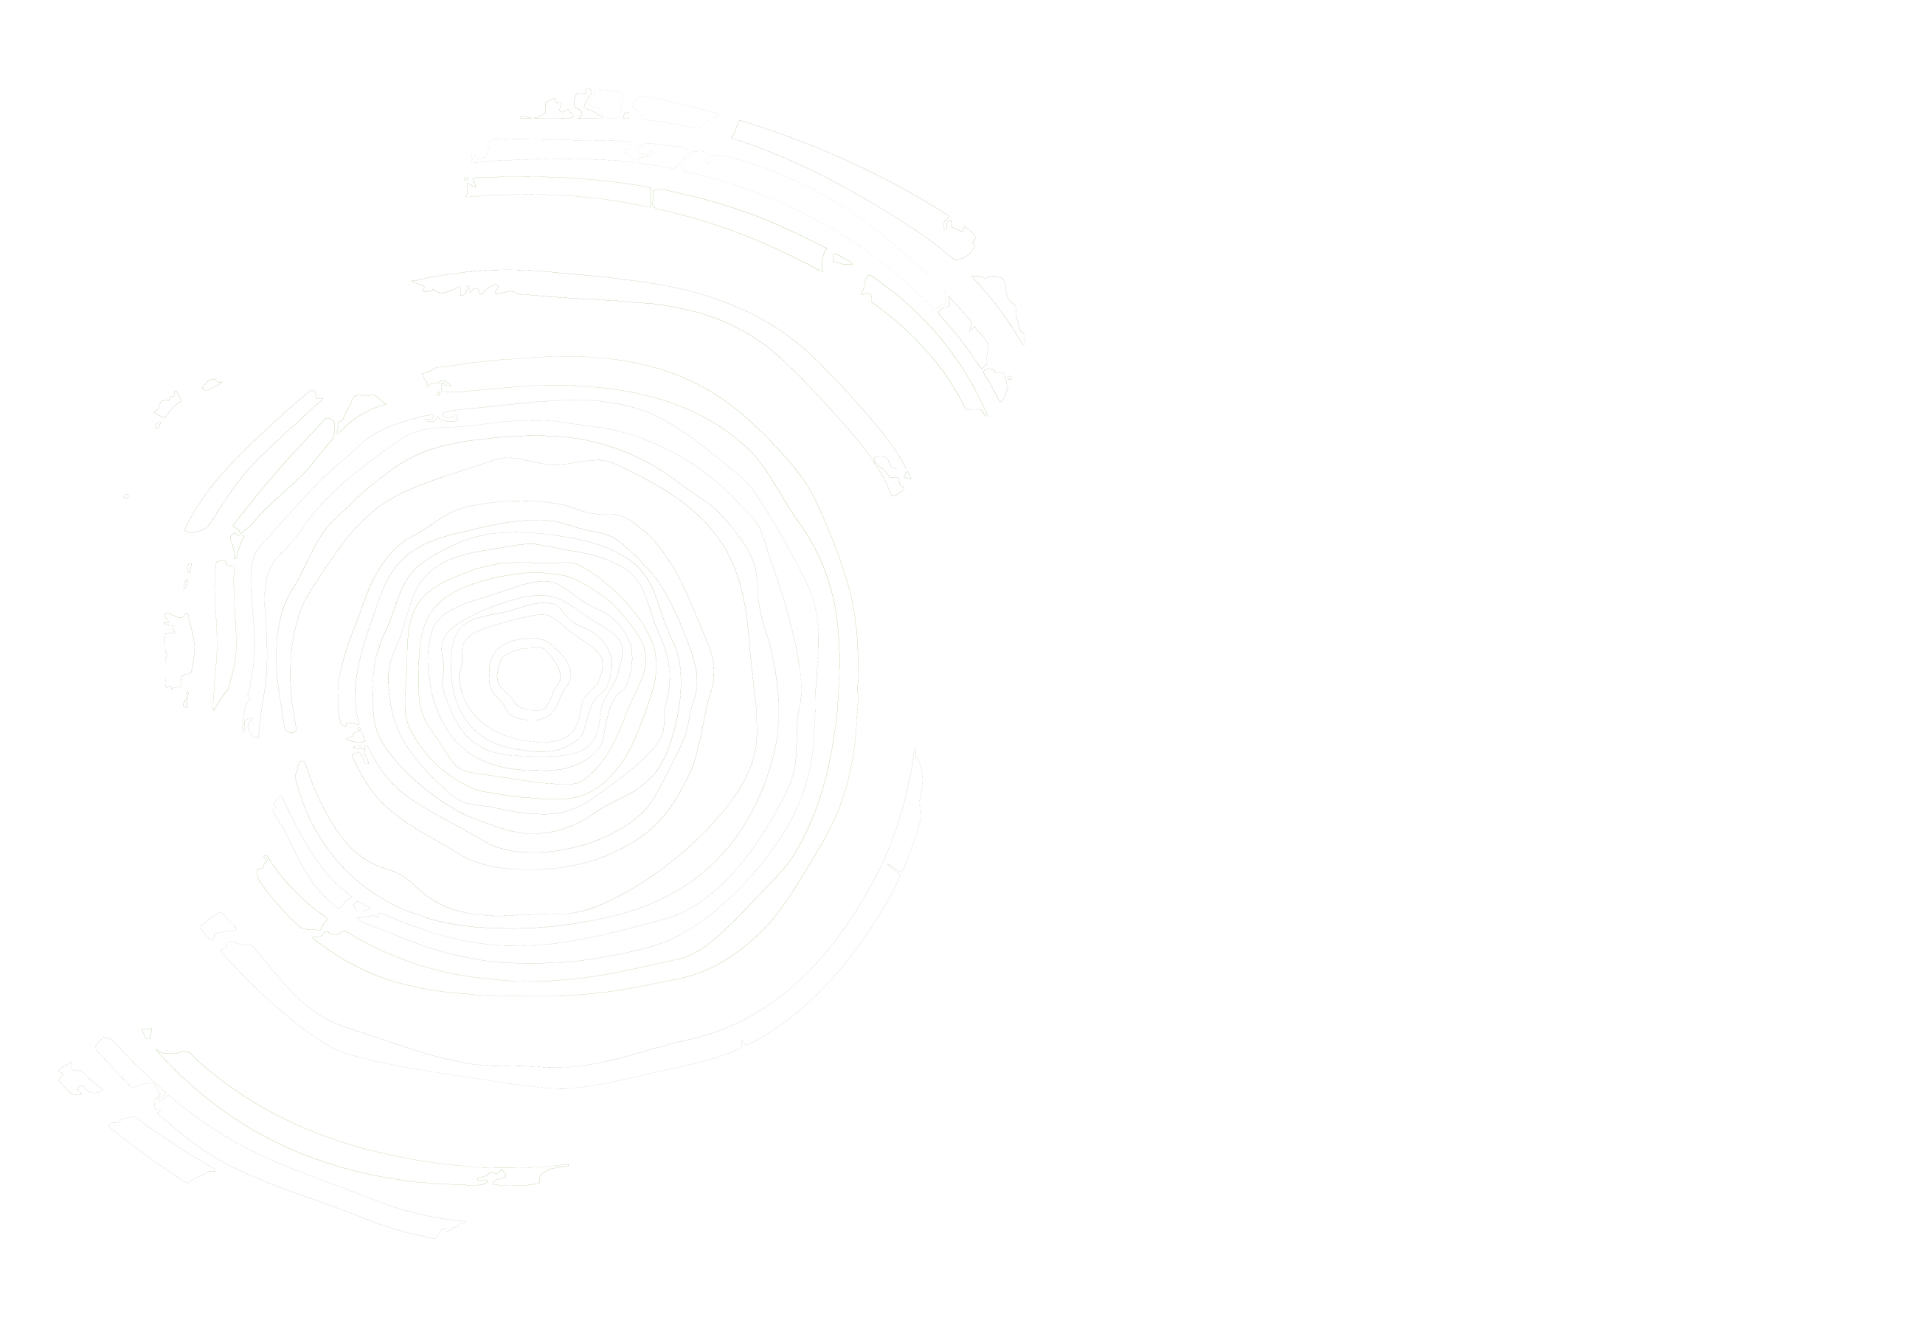 Field Studies Ireland